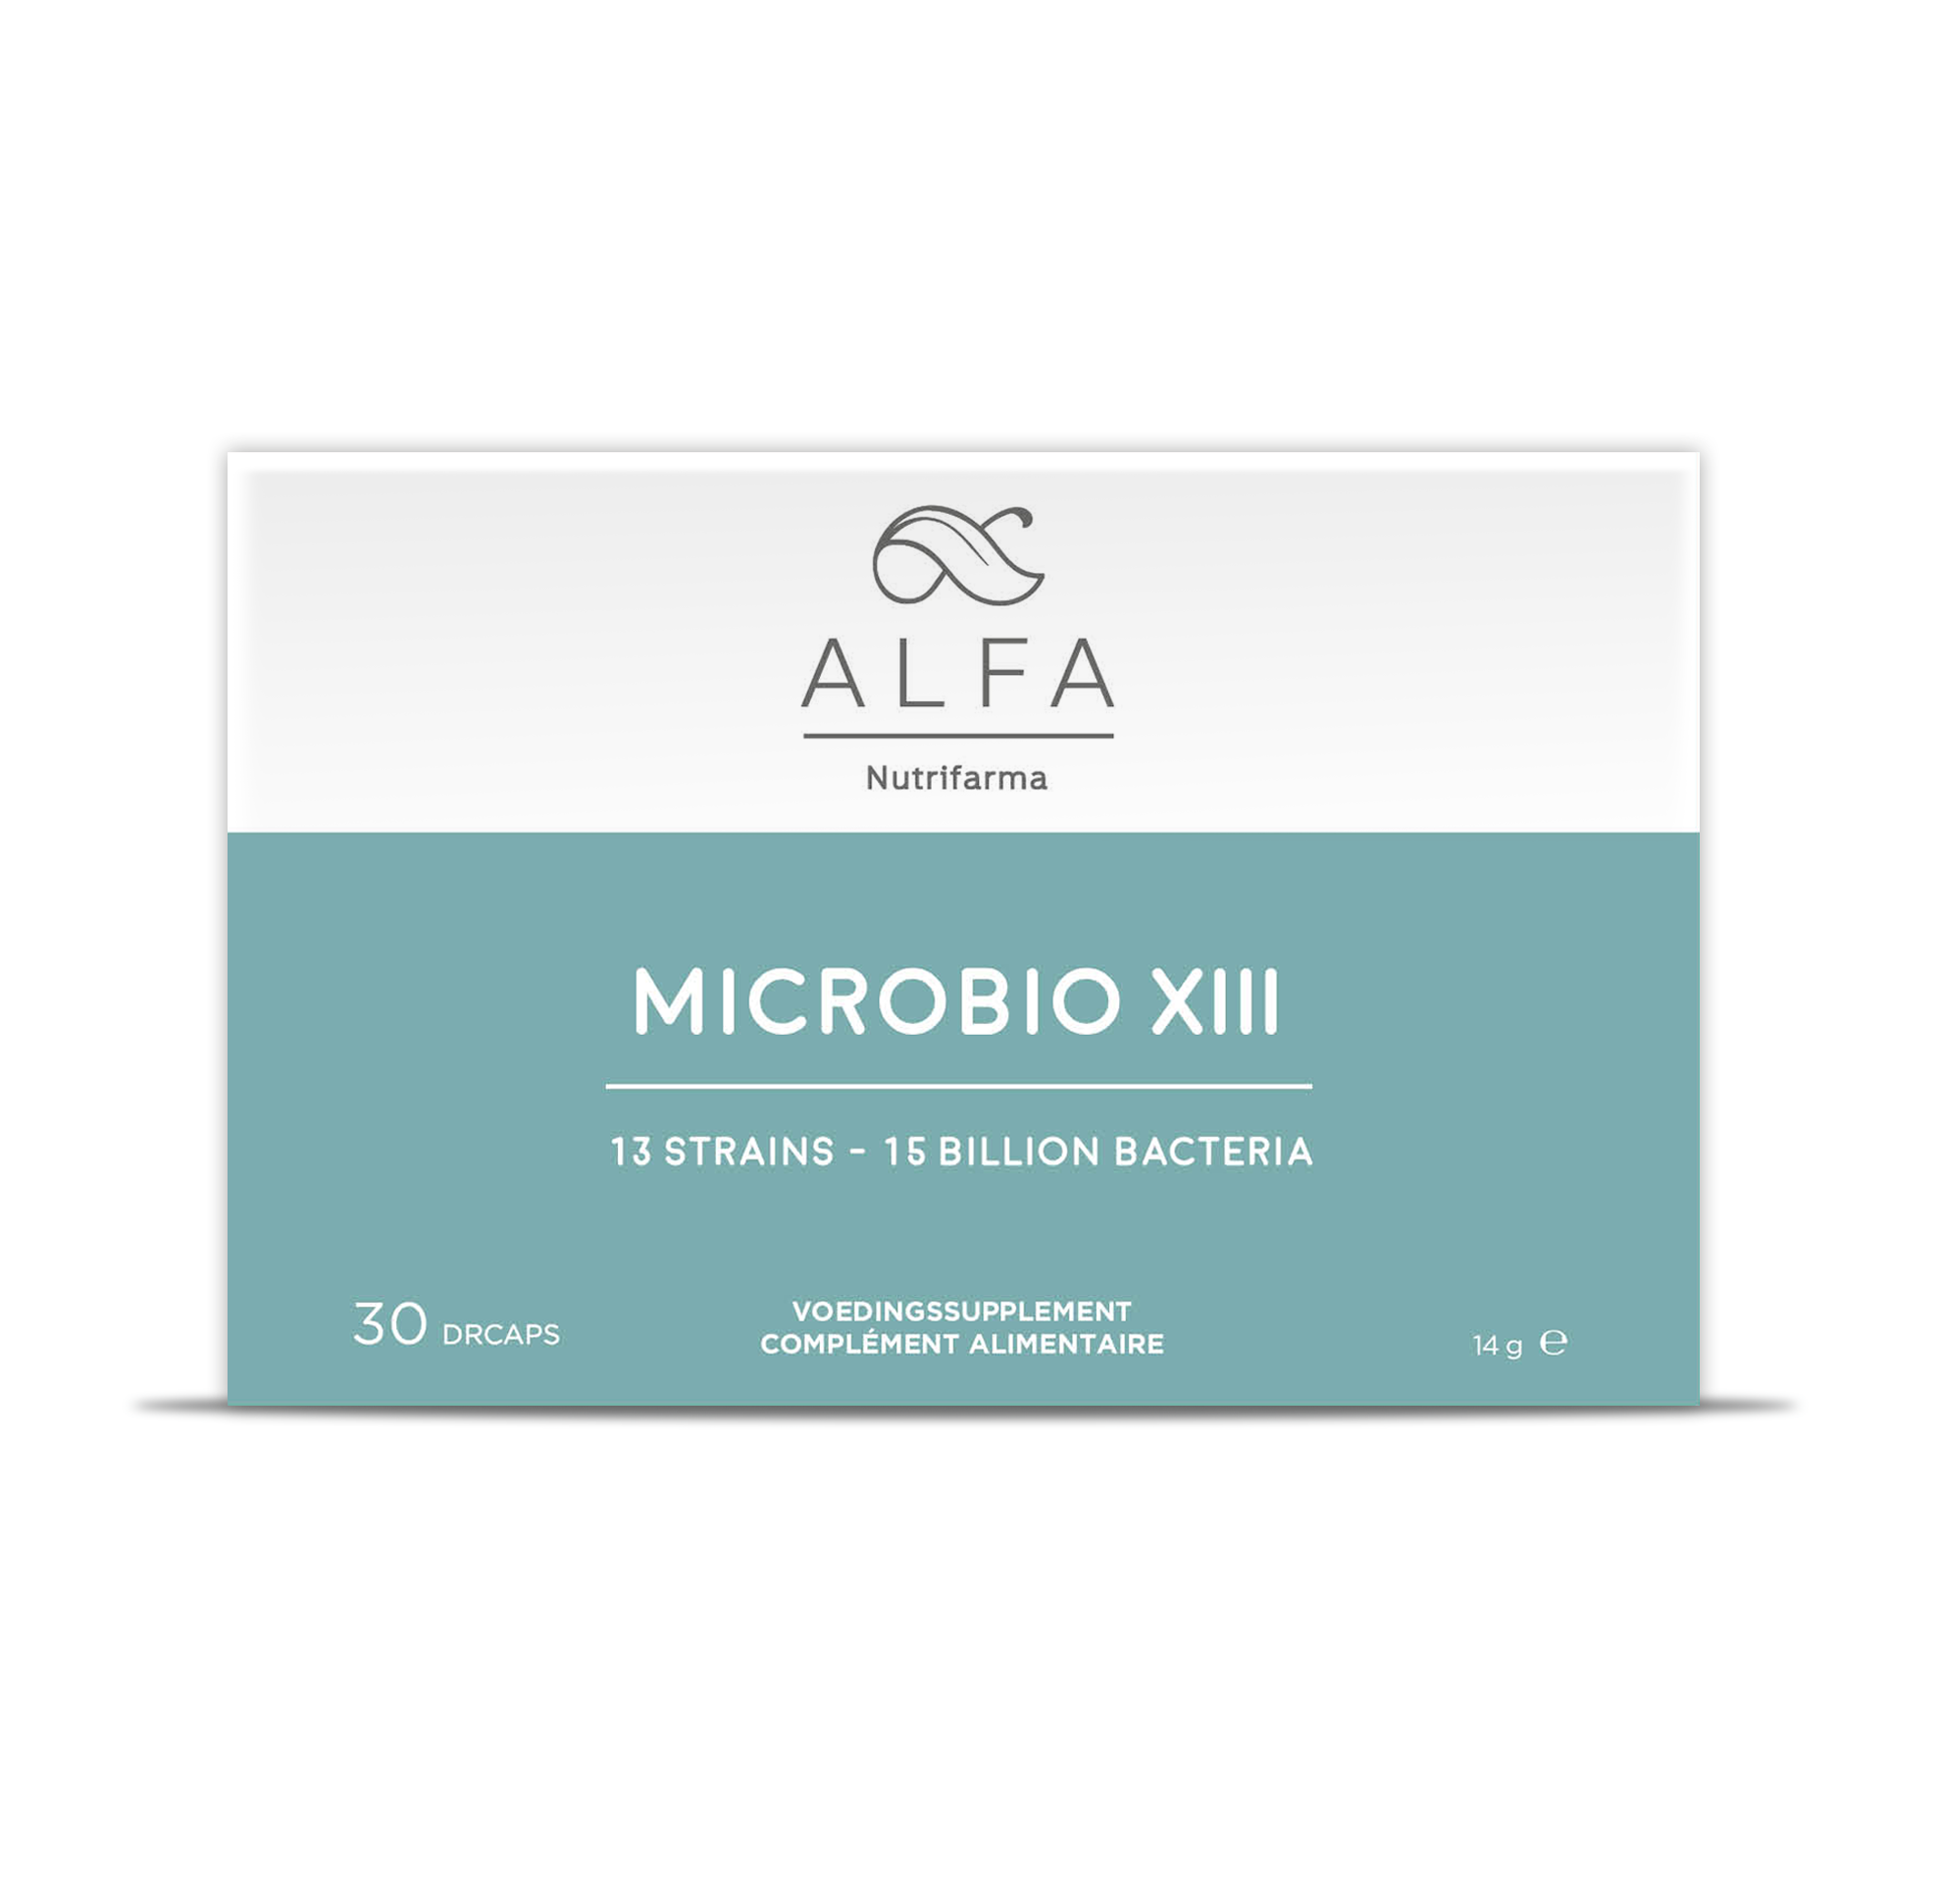 Microbio XIII - 30 DR caps 